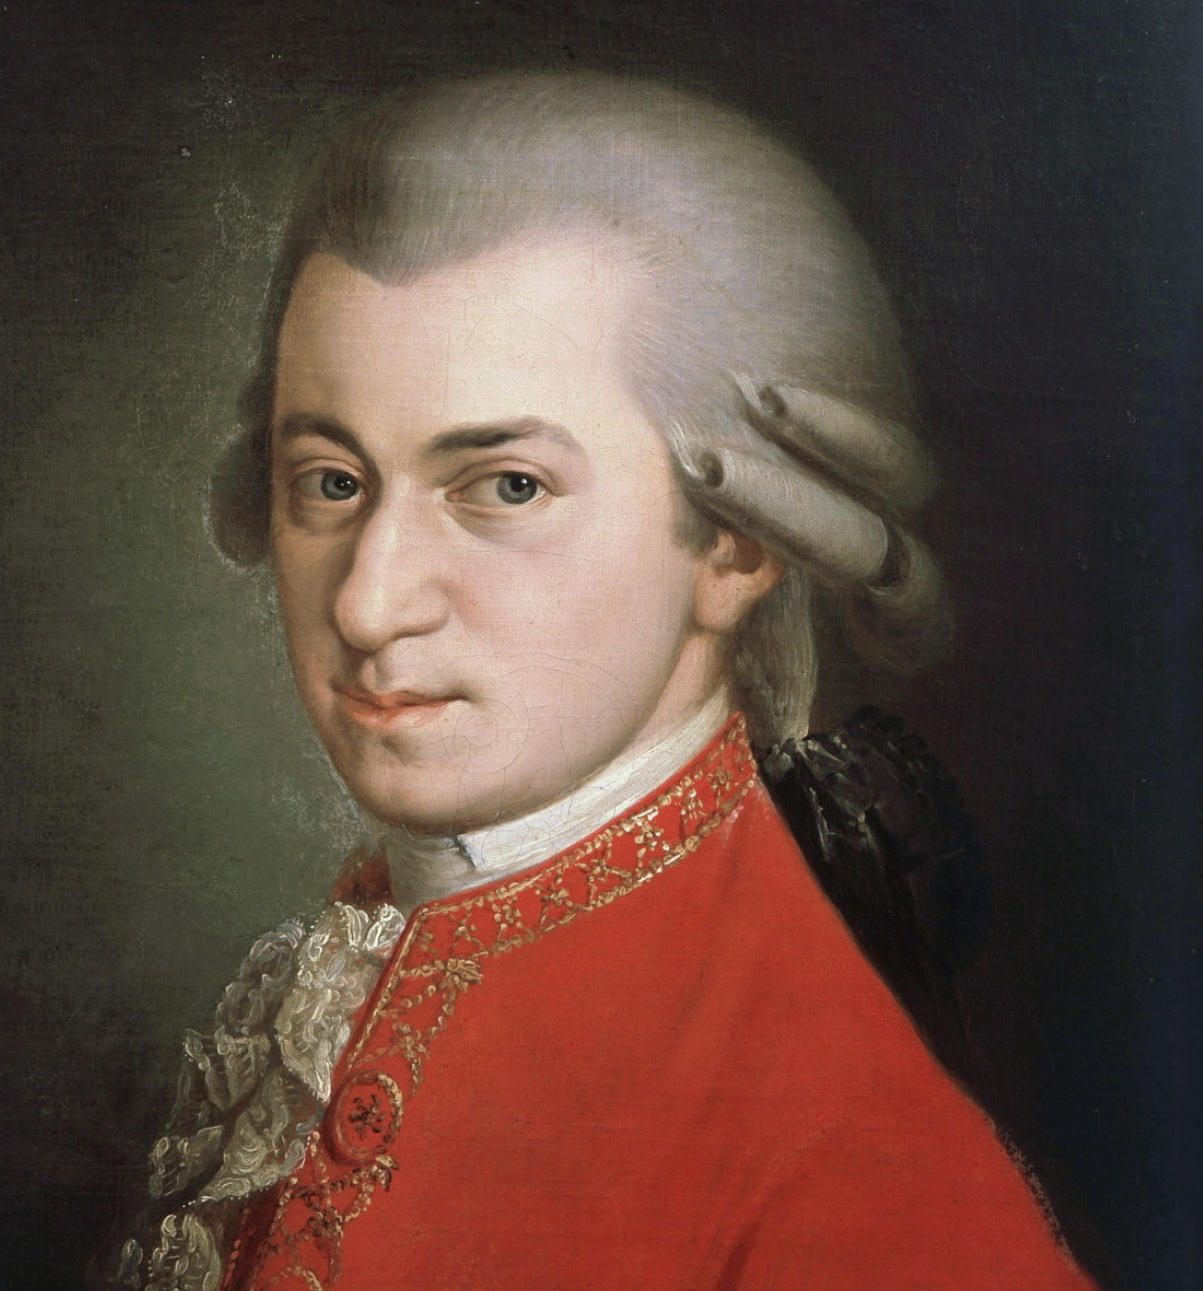 Mozart by Wolfgang Amadeus Mozart